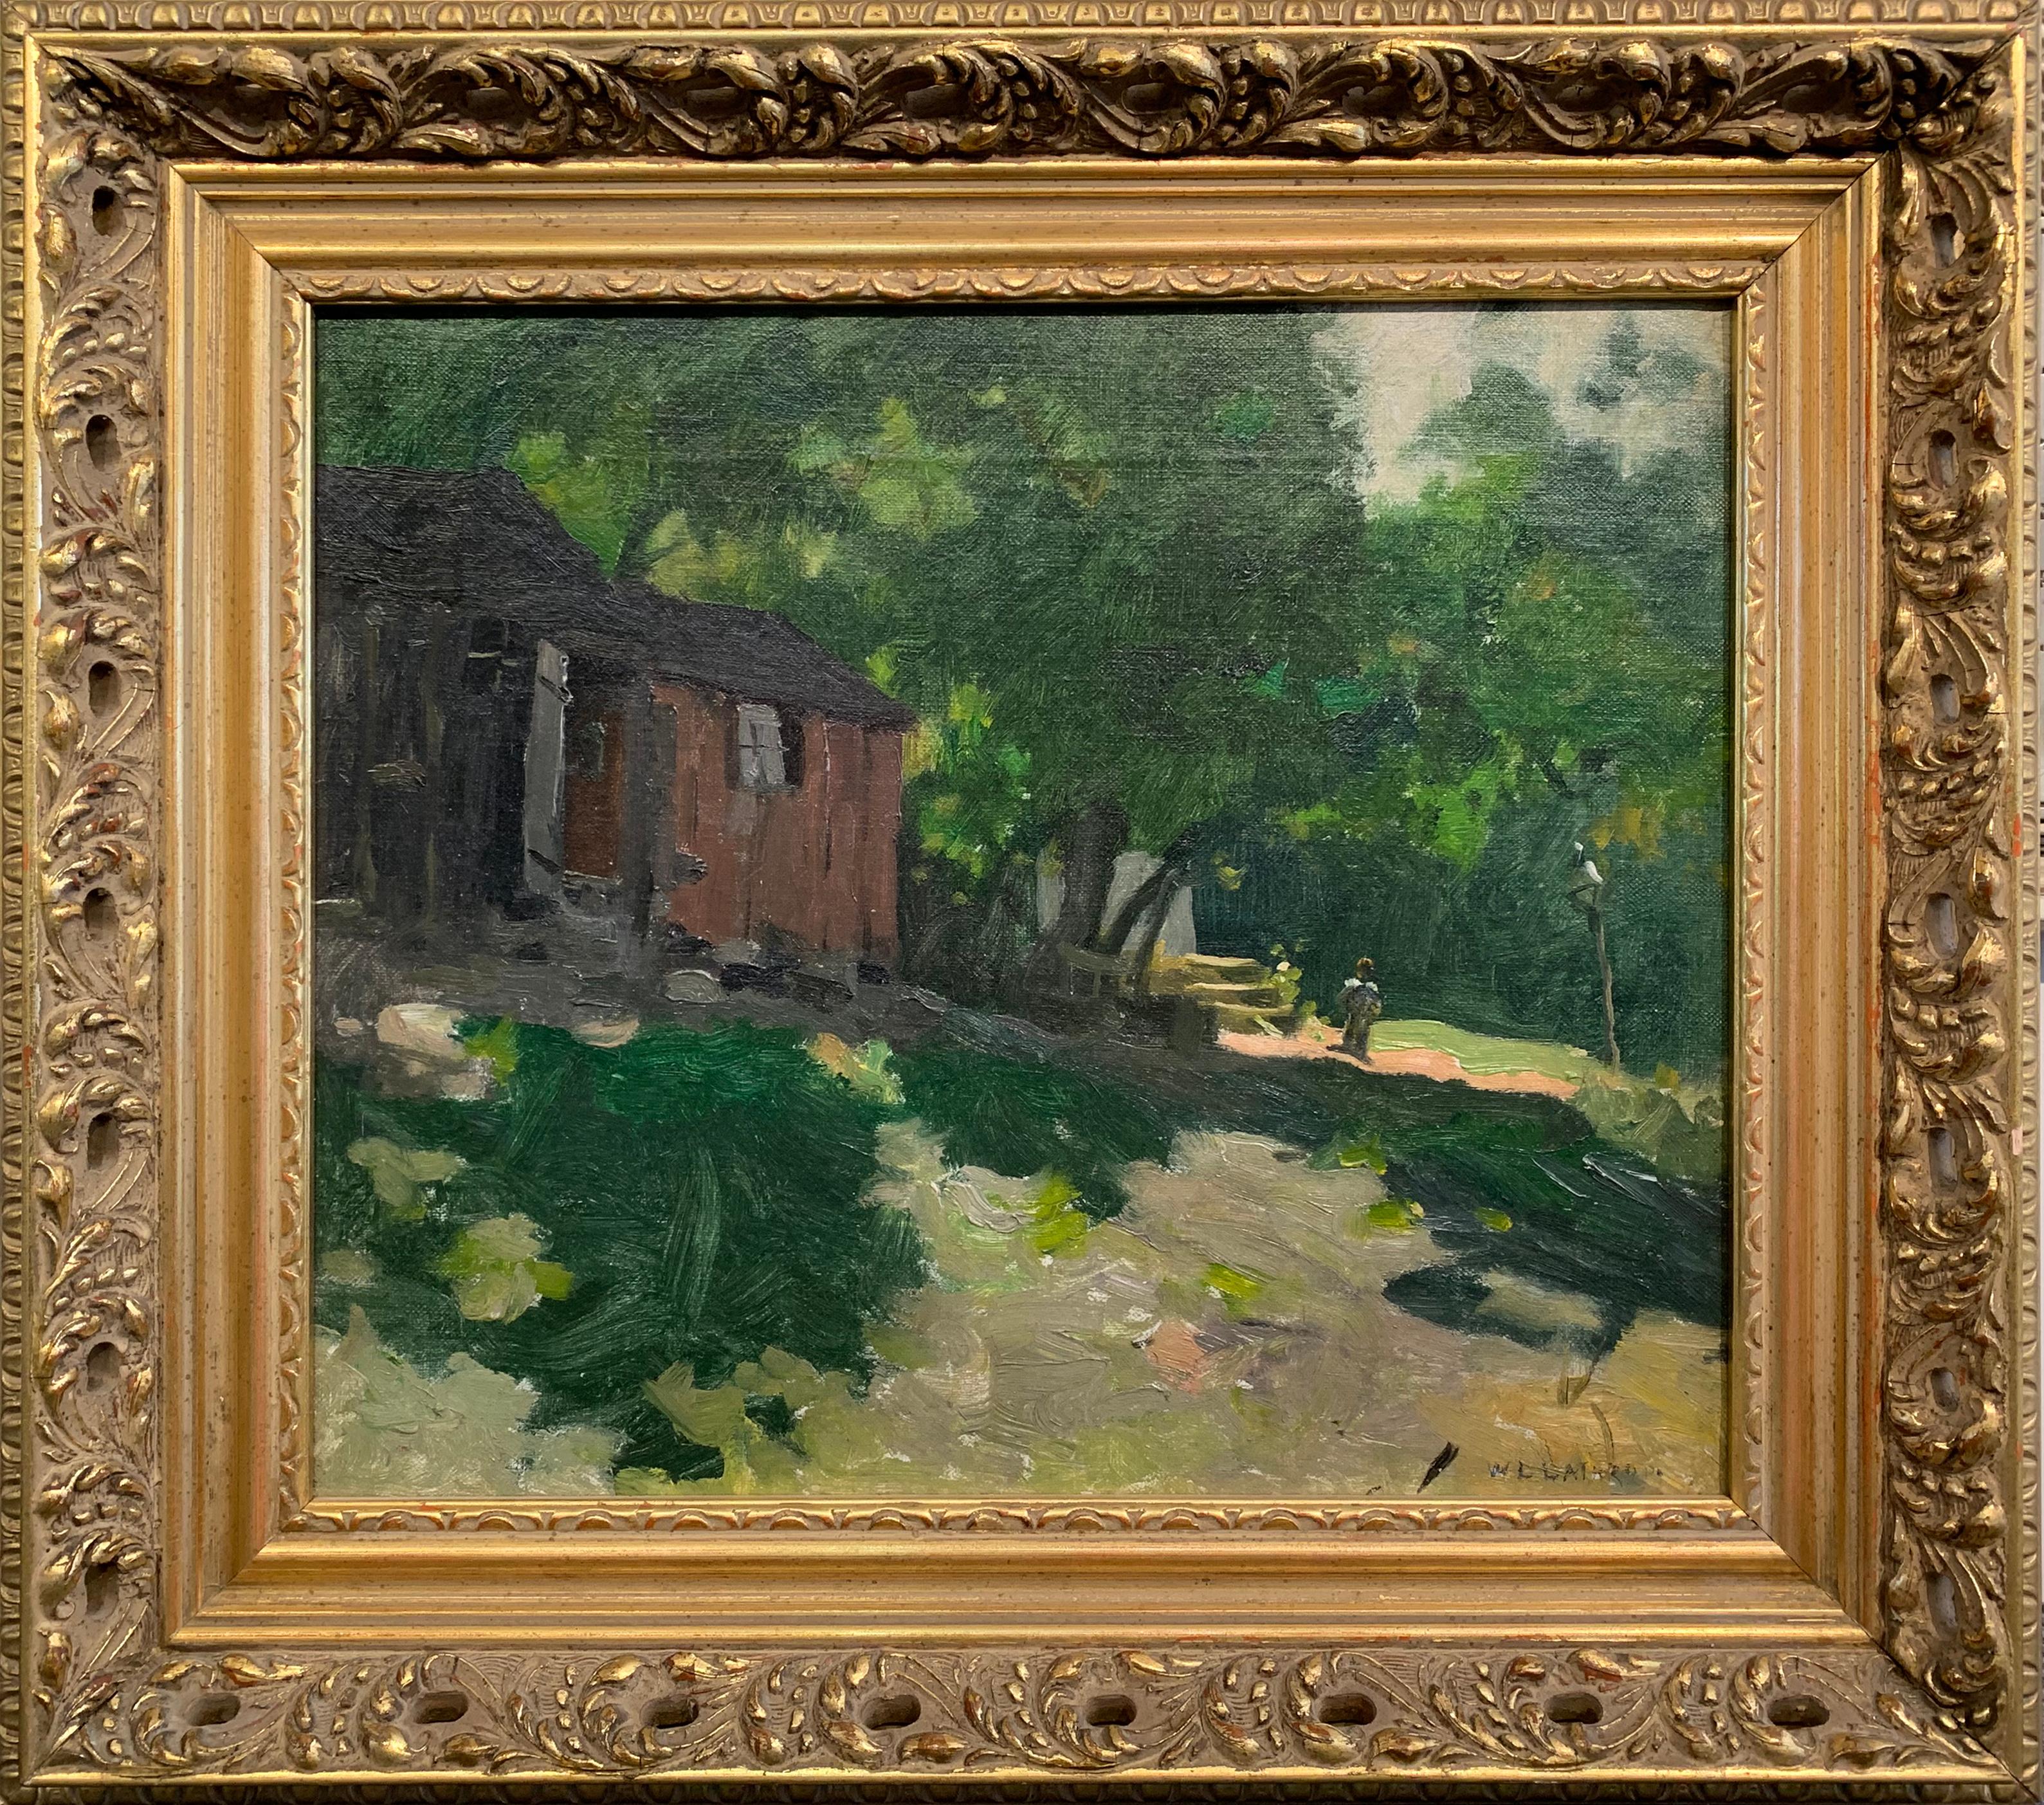 William Langson Lathrop Landscape Painting - Fisherman's Home, New Hope School, Impressionist Landscape, Oil on Canvas